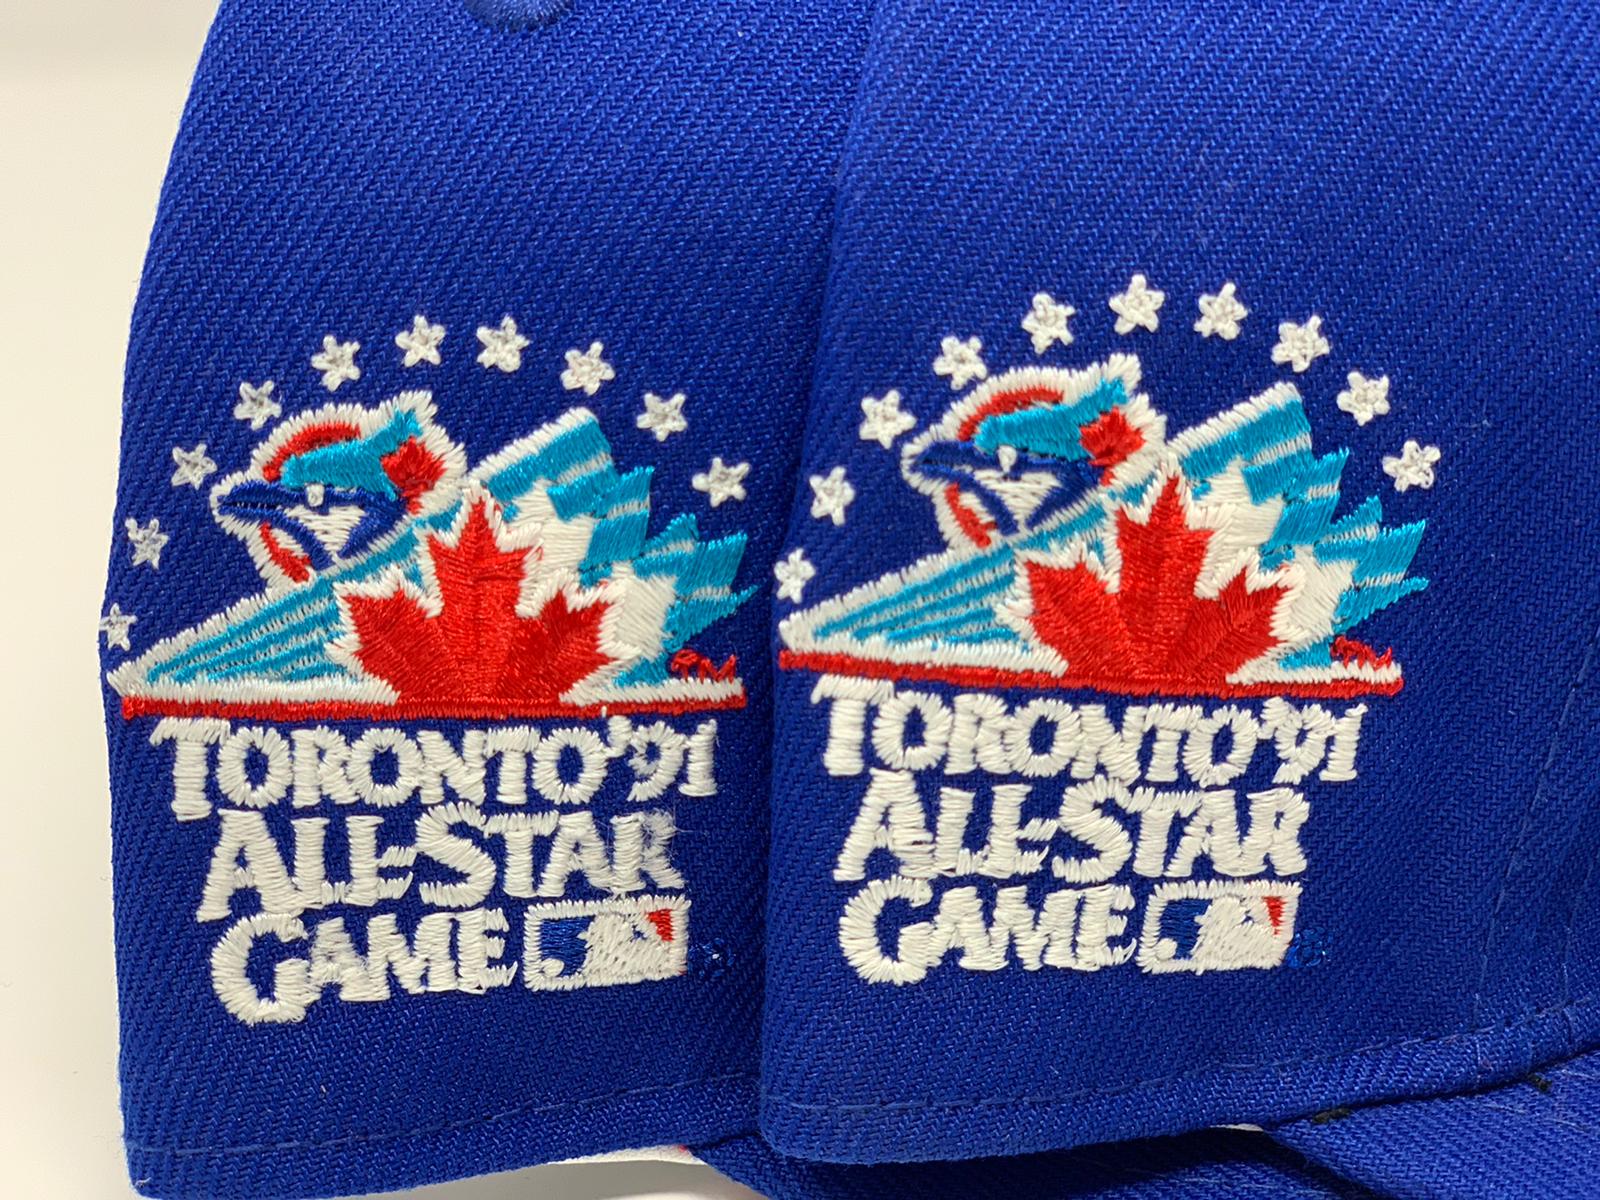 1991 All Star Game Toronto Blue Jays original jersey XL? Labatt's Beer  shirt